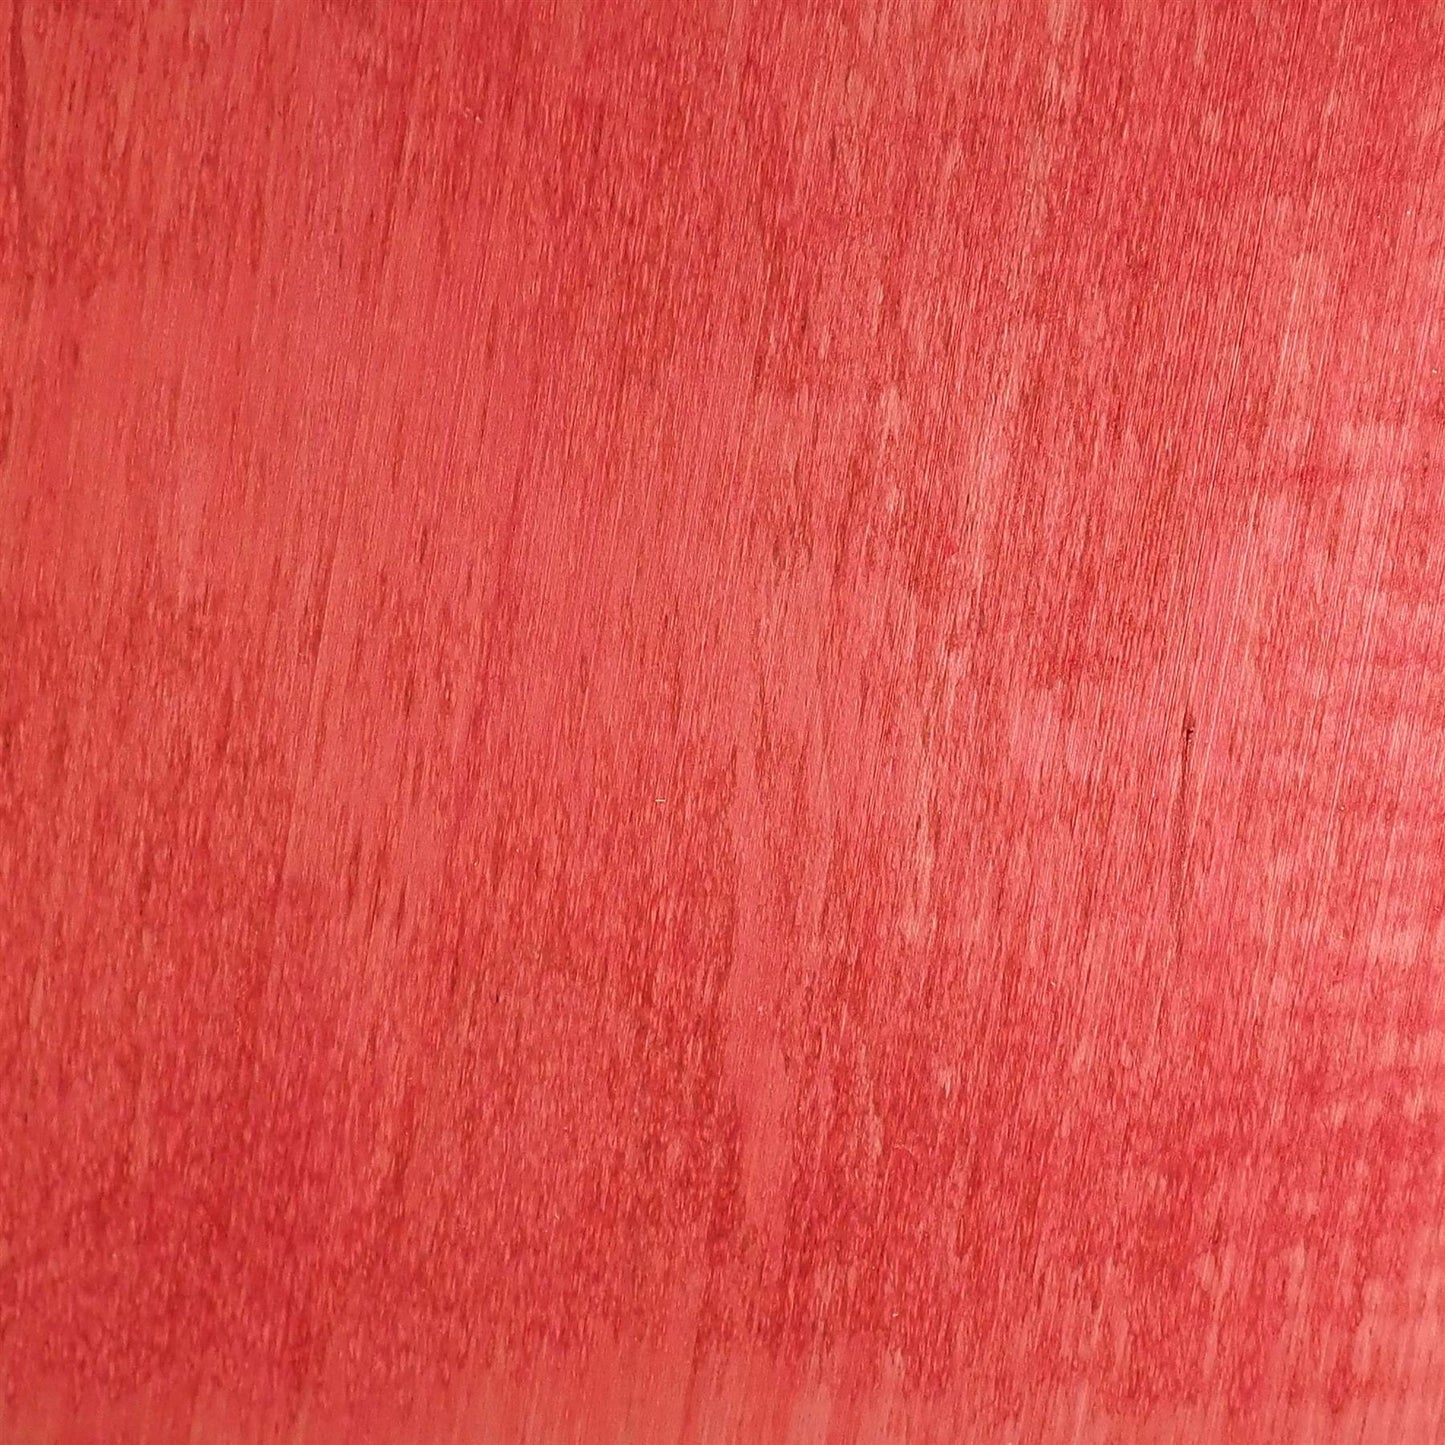 dartfords Cherry Red Alcohol Soluble Aniline Wood Dye Powder - 28g 1Oz